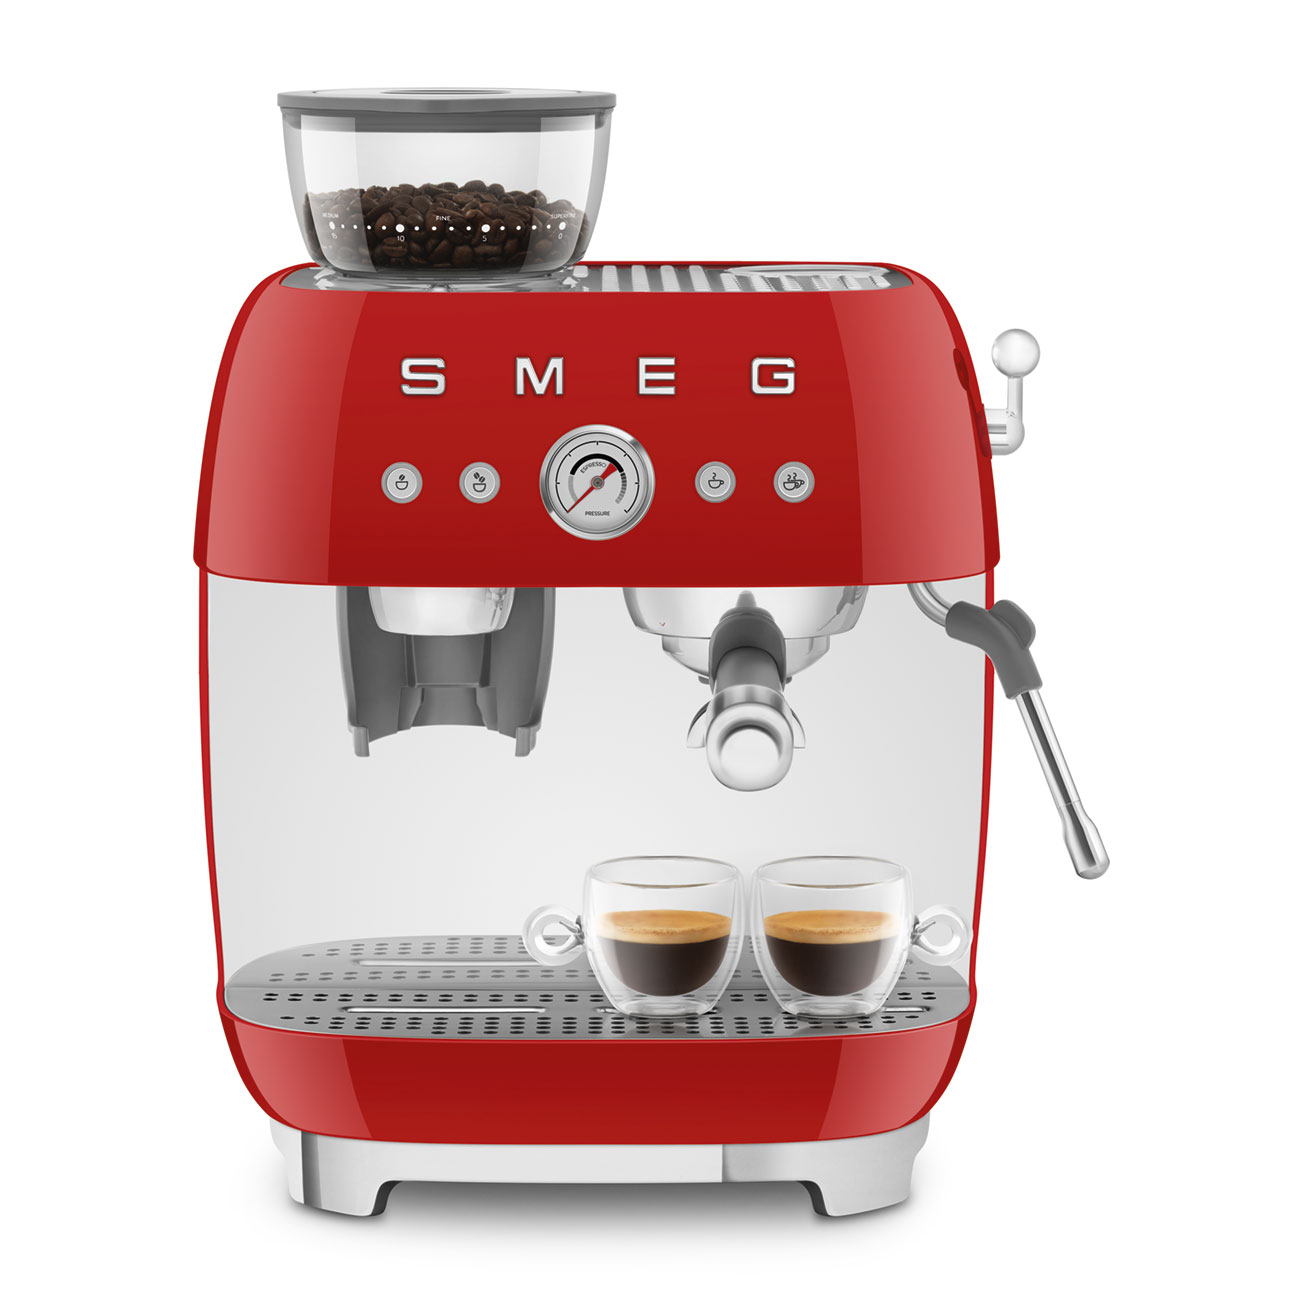 Smeg Red Espresso Manual Coffee Machine with Grinder_8